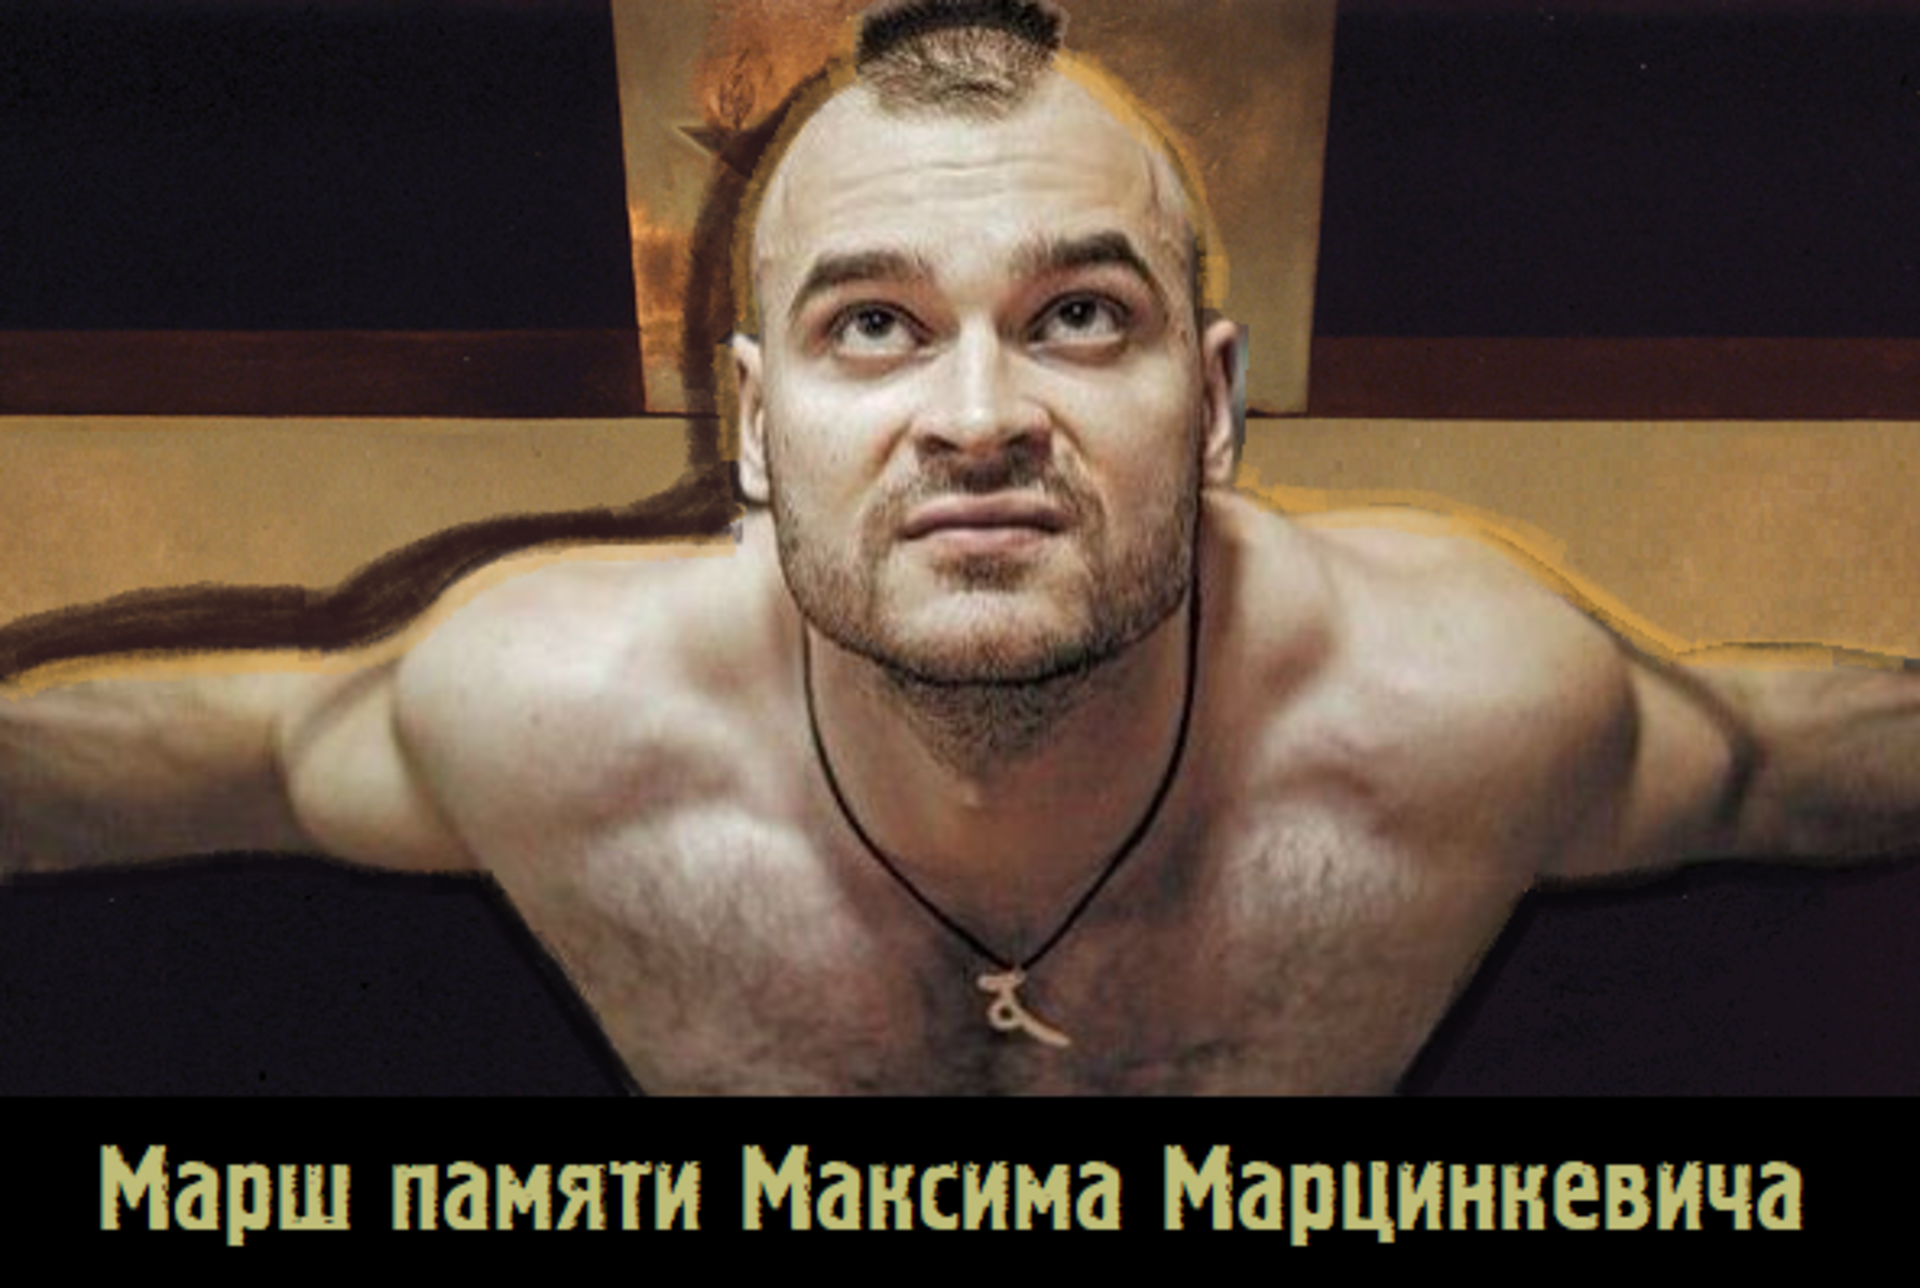 Максим Марцинкевич мышцы